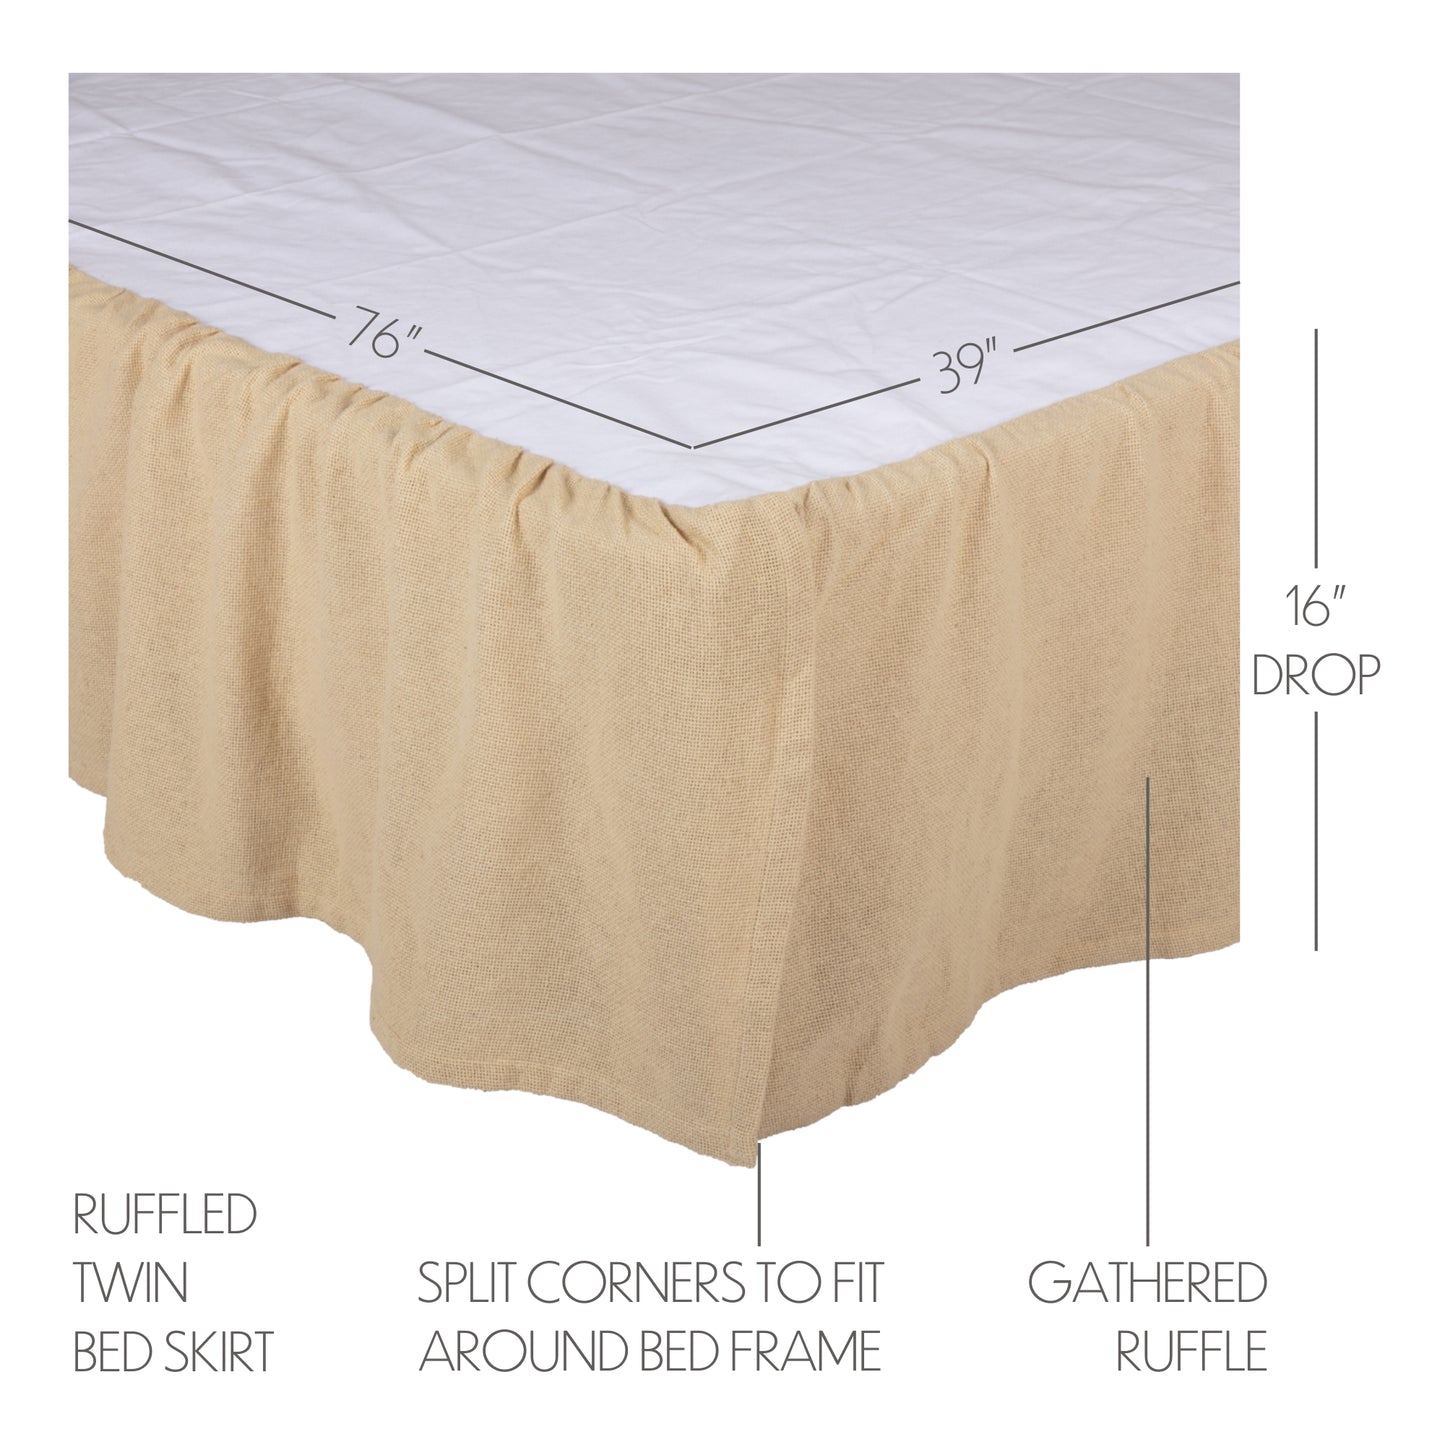 51801-Burlap-Vintage-Ruffled-Twin-Bed-Skirt-39x76x16-image-1